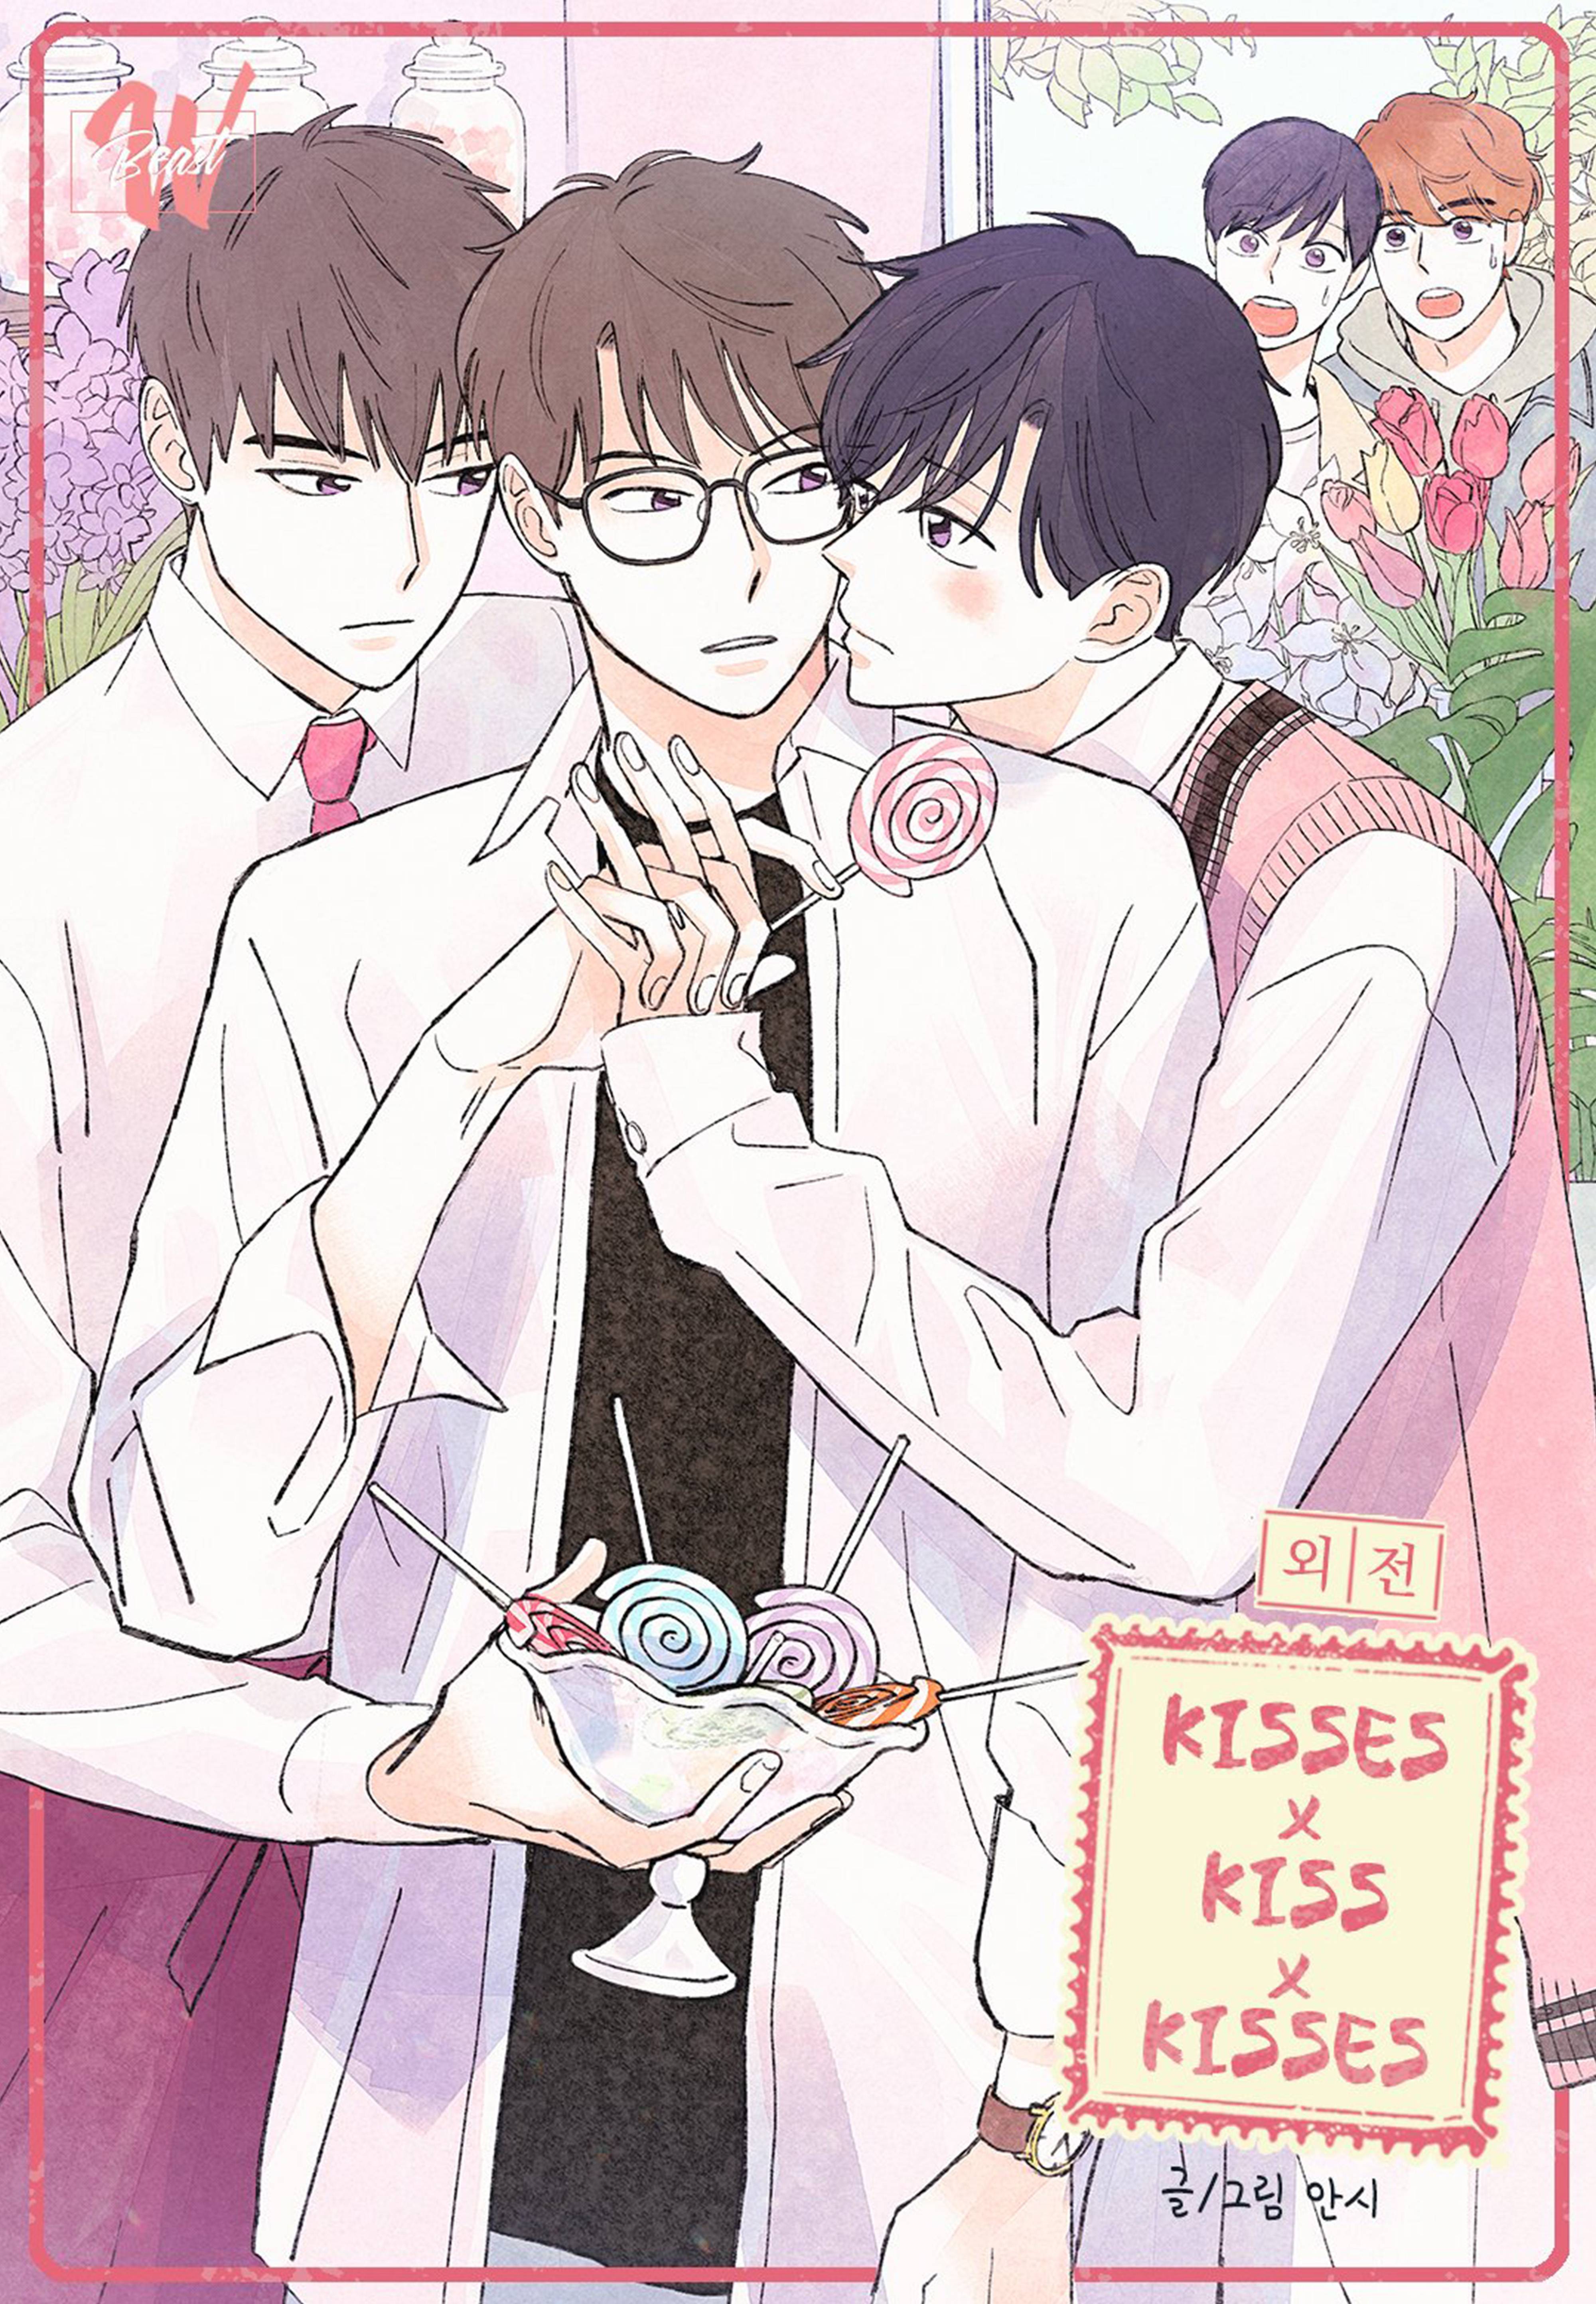 Kisses x Kiss x Kisses - chapter 85 - #2